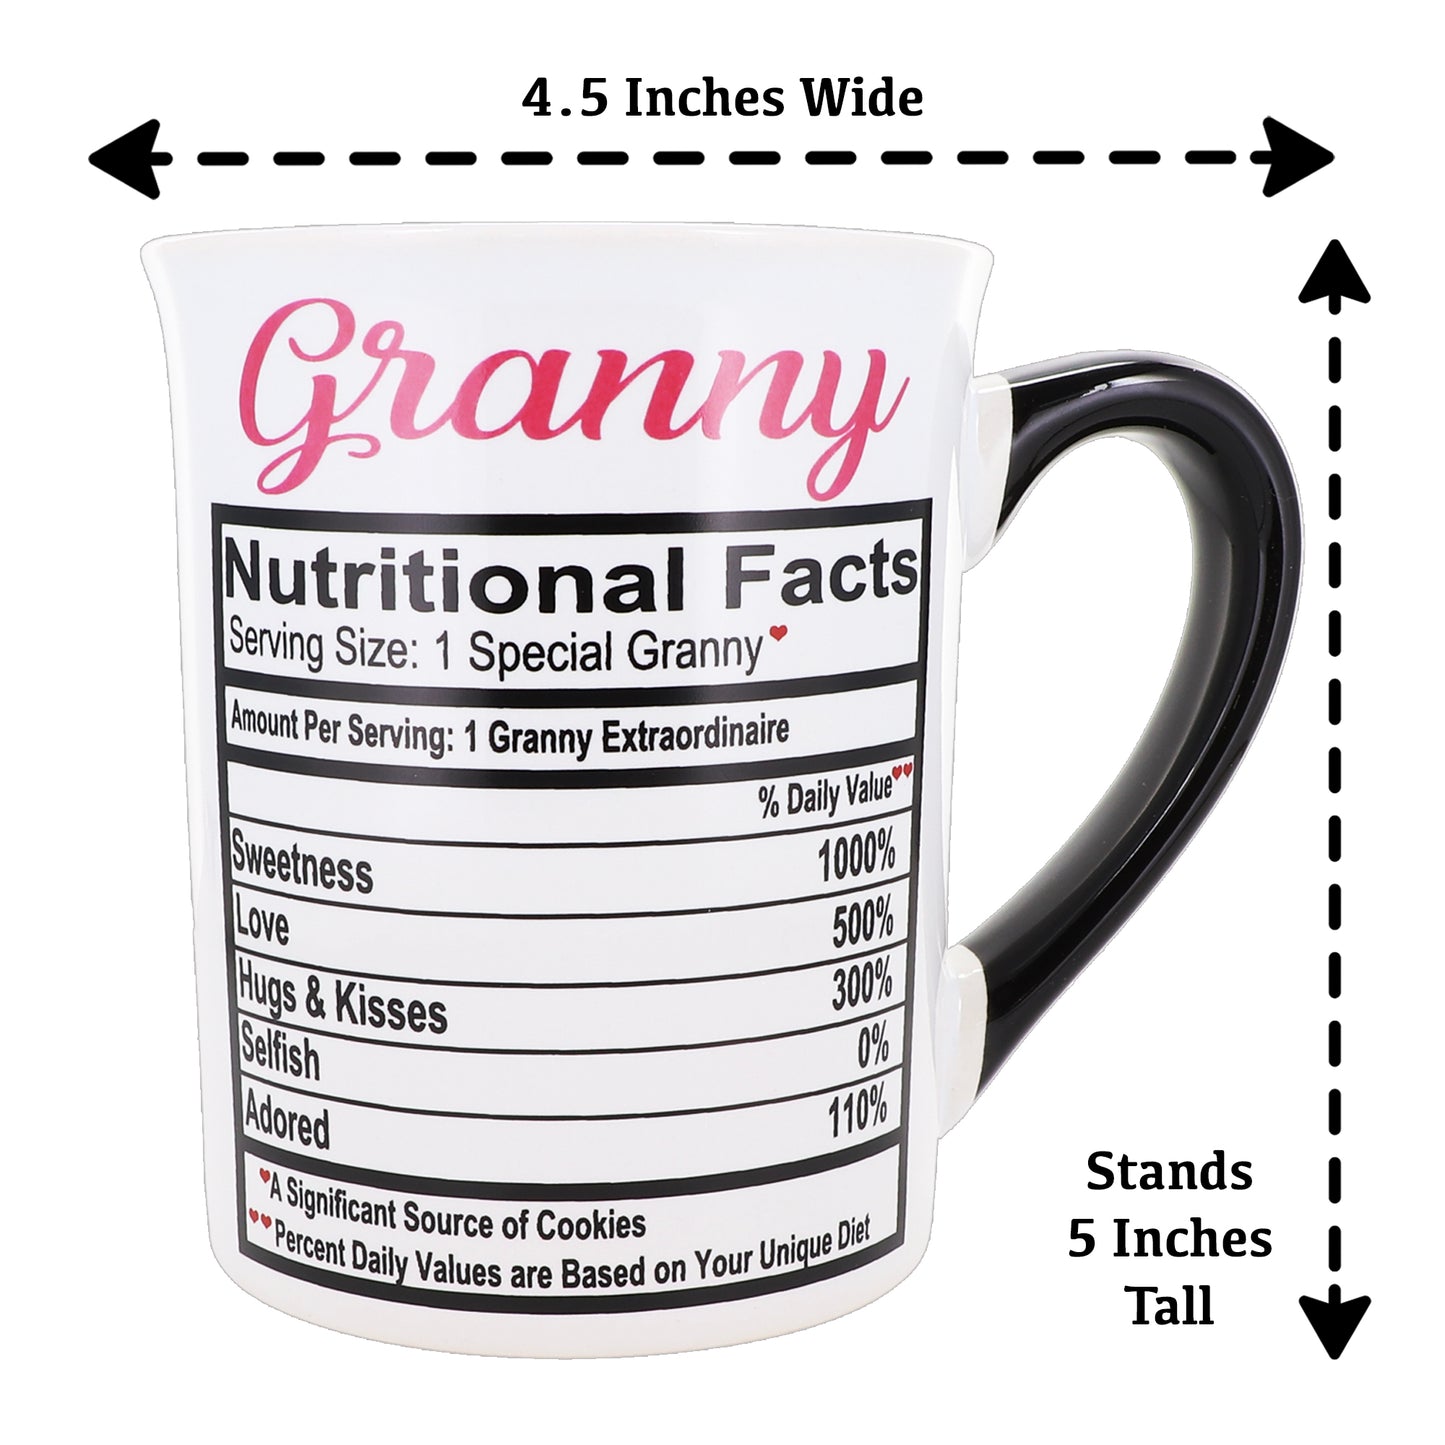 Cottage Creek Granny Mug, Granny Coffee Mug for Granny, 16oz., 6" Multicolored